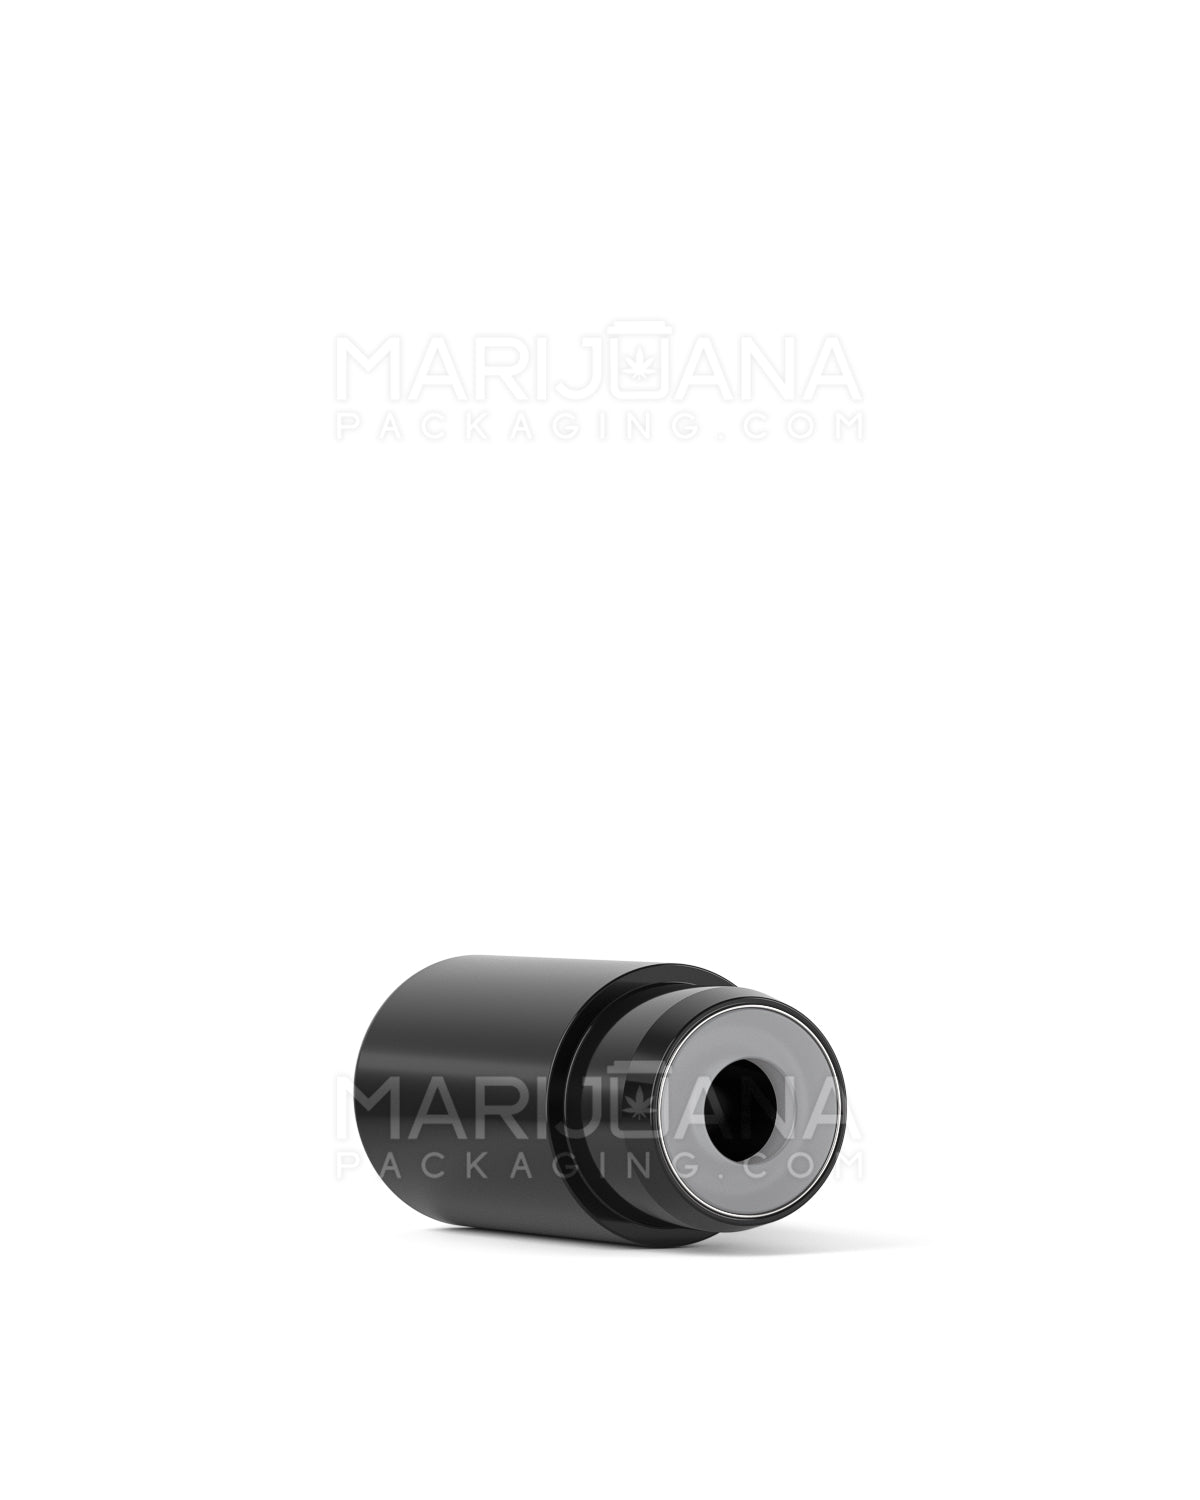 AVD | Barrel Vape Mouthpiece for GoodCarts Plastic Cartridges | Black Plastic - Press On - 600 Count - 6